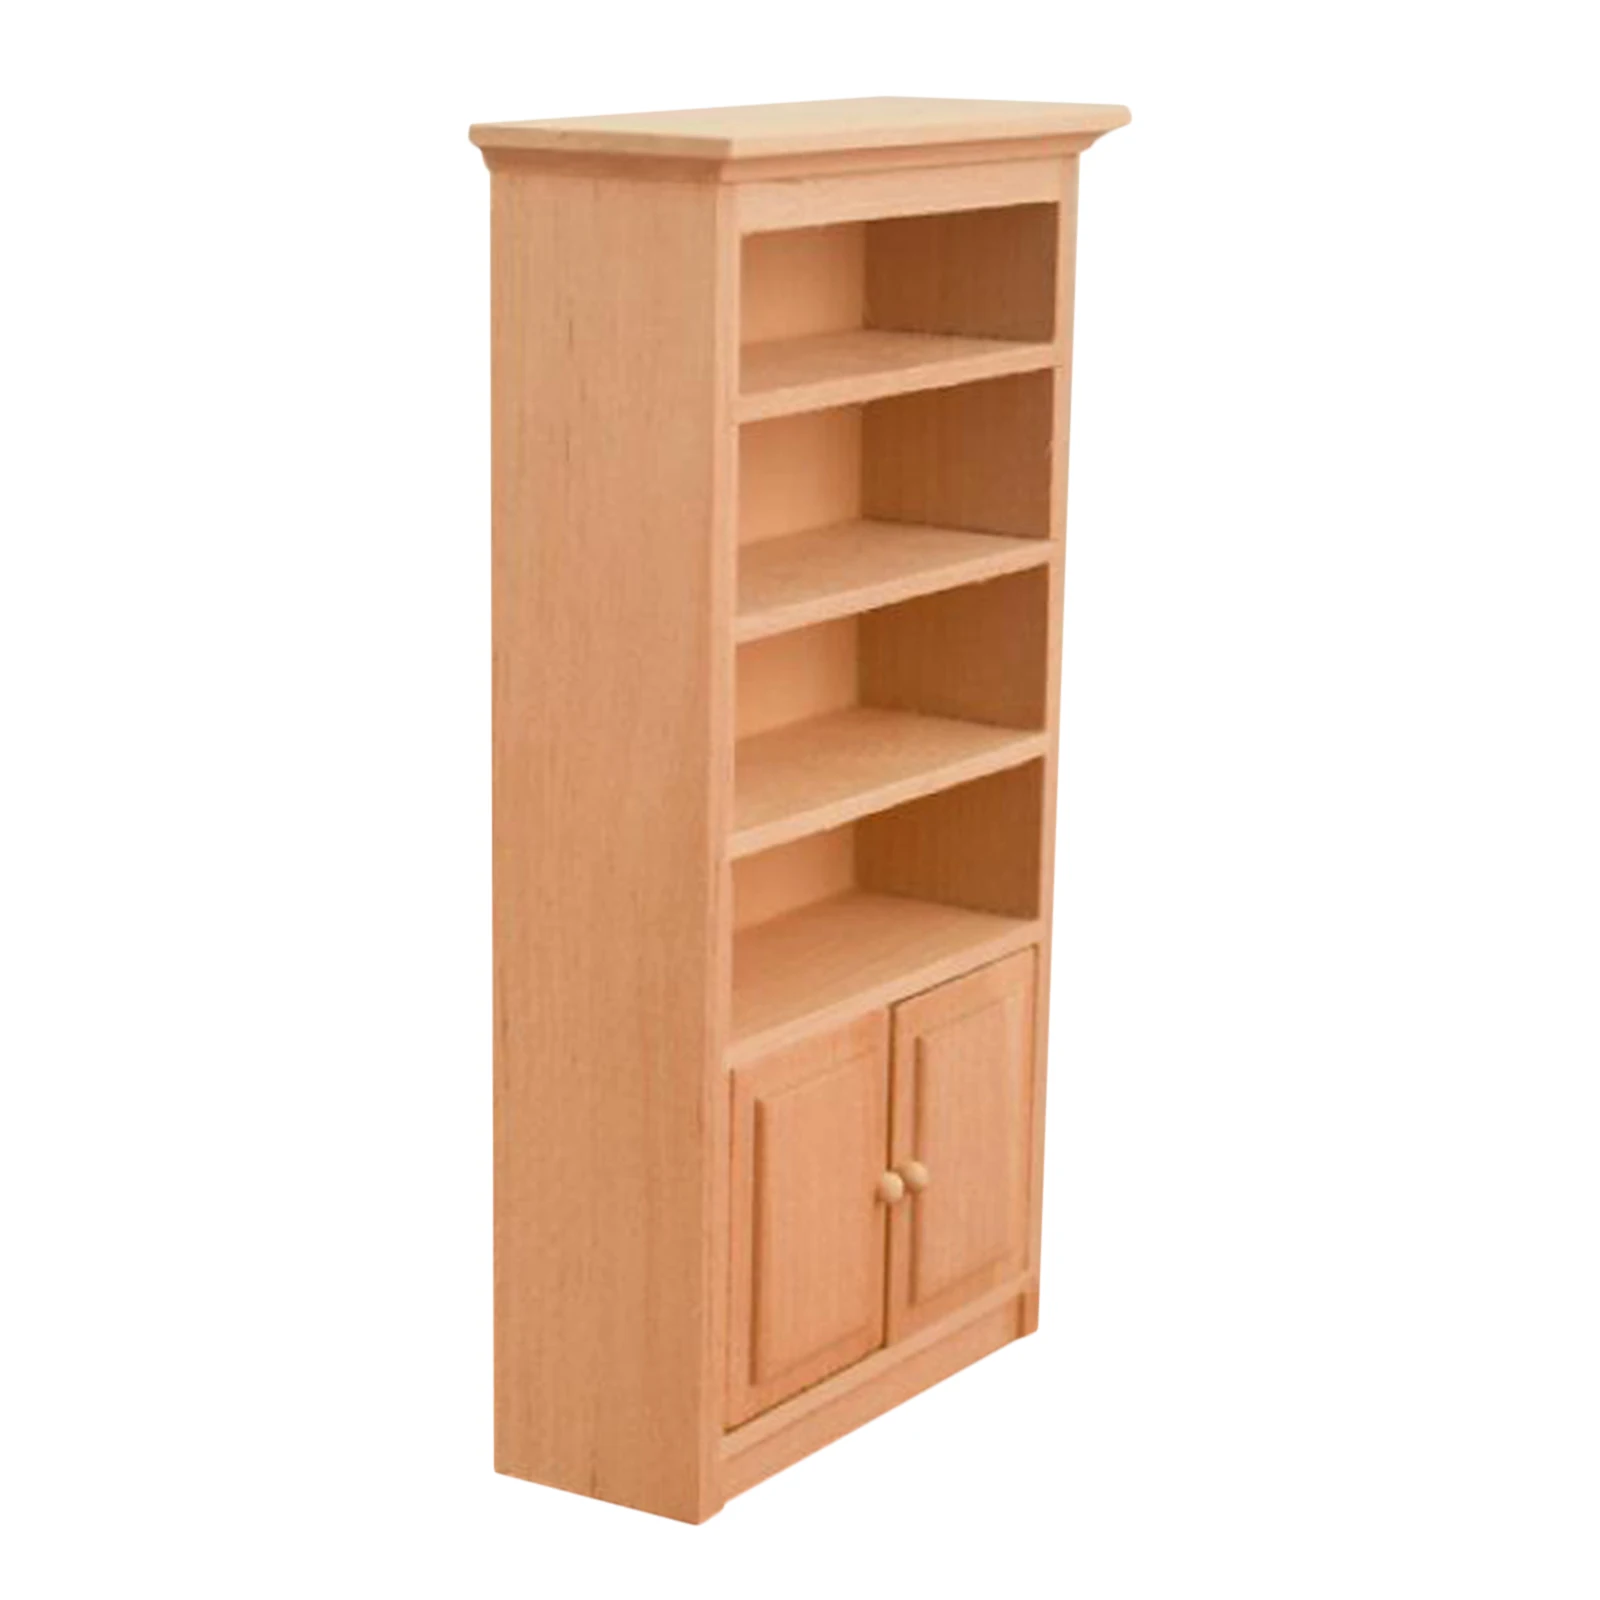 1/12 Doll House Miniature Wood Cabinet Bookshelf Simulation Supplies Scenery